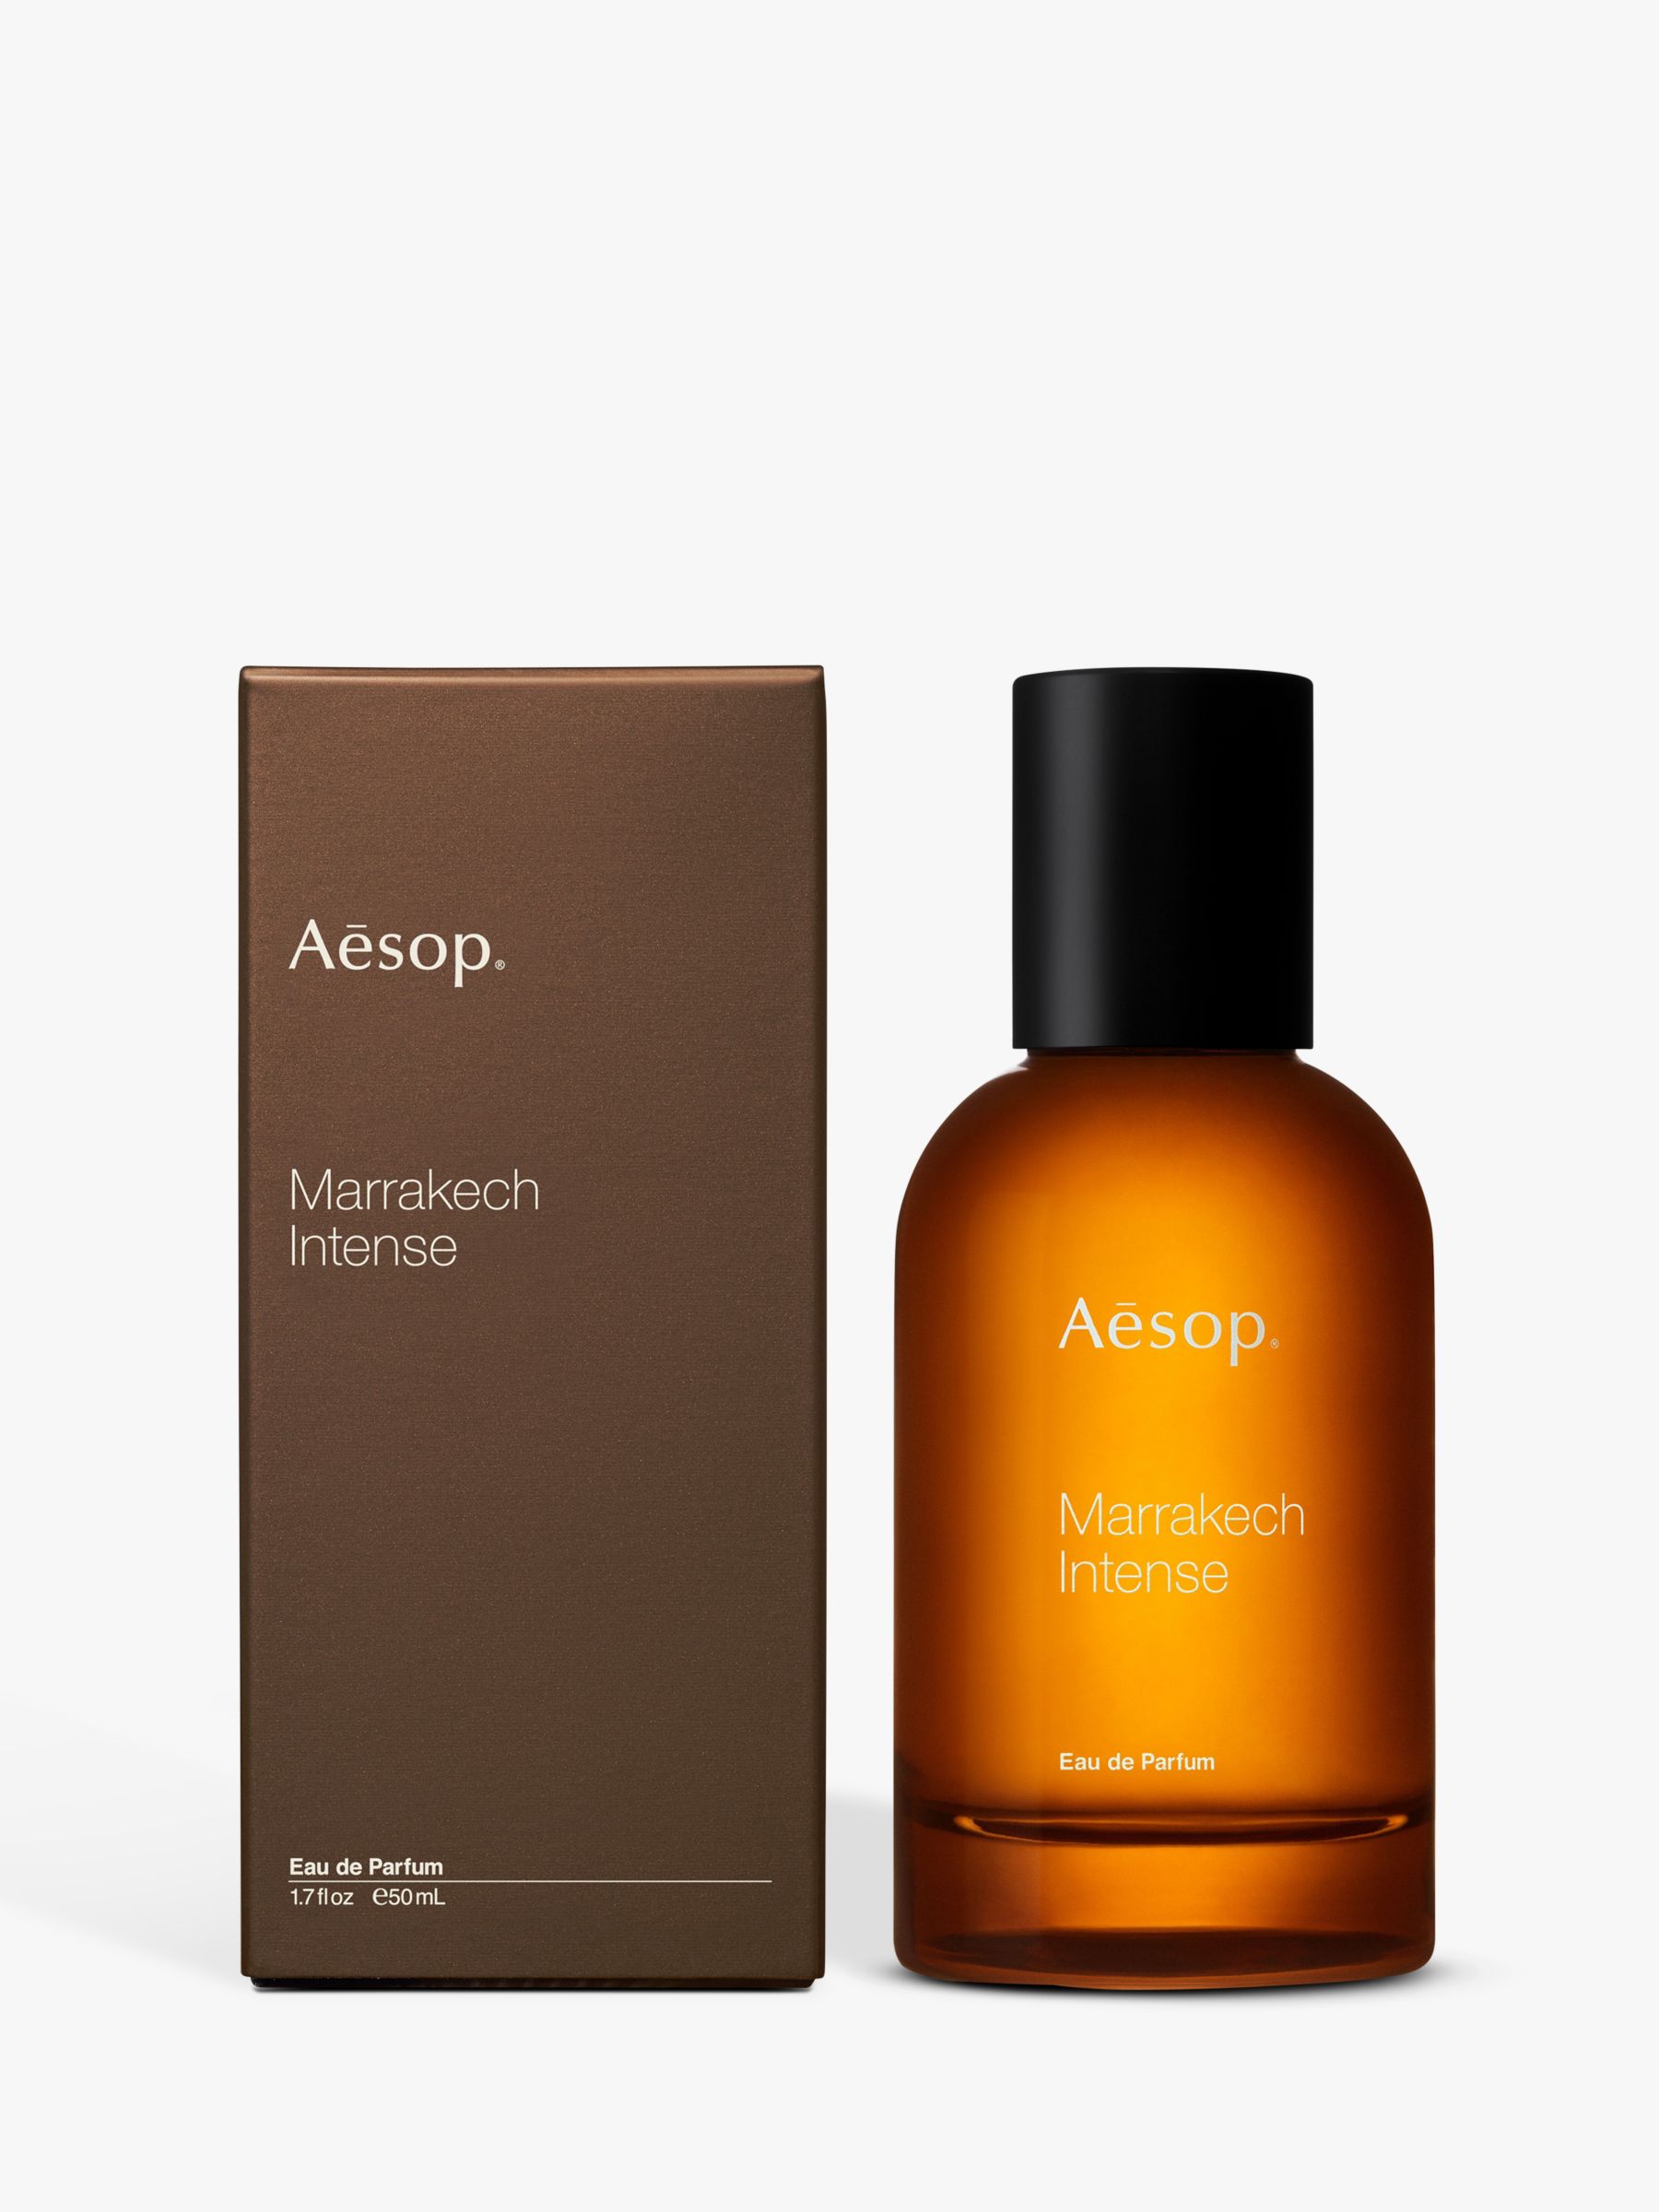 Aesop Marrakech Intense Parfum, 50ml at John Lewis & Partners